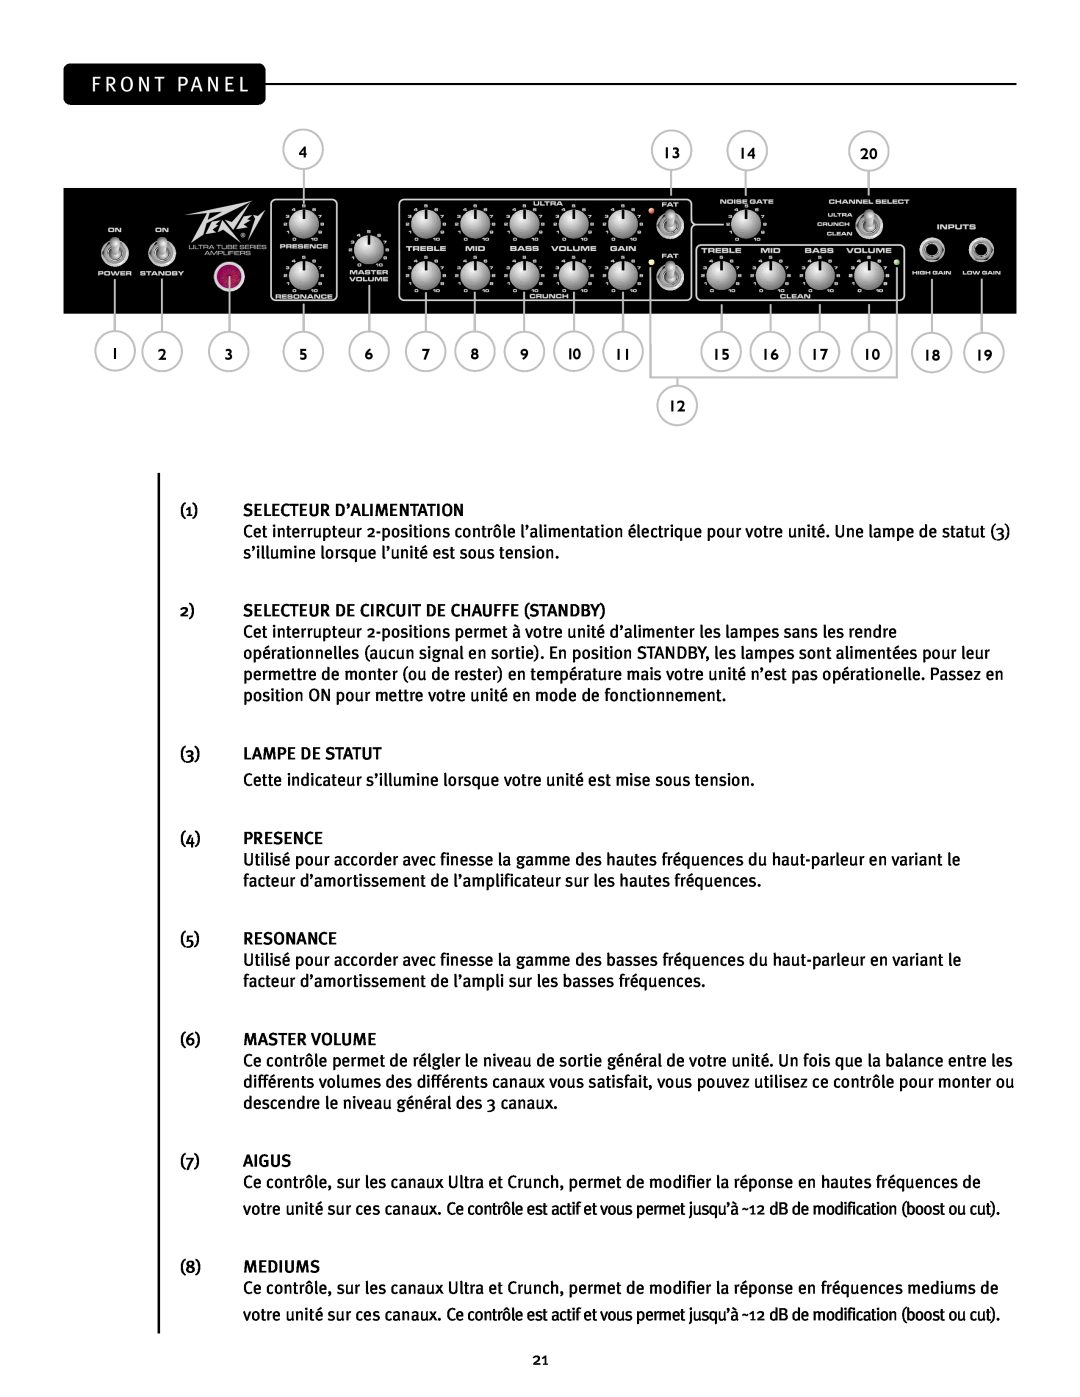 Peavey JSX Joe Satriani Signature All-Tube Amplifier manual F R O N T Pa N E L, 1SELECTEUR D’ALIMENTATION 